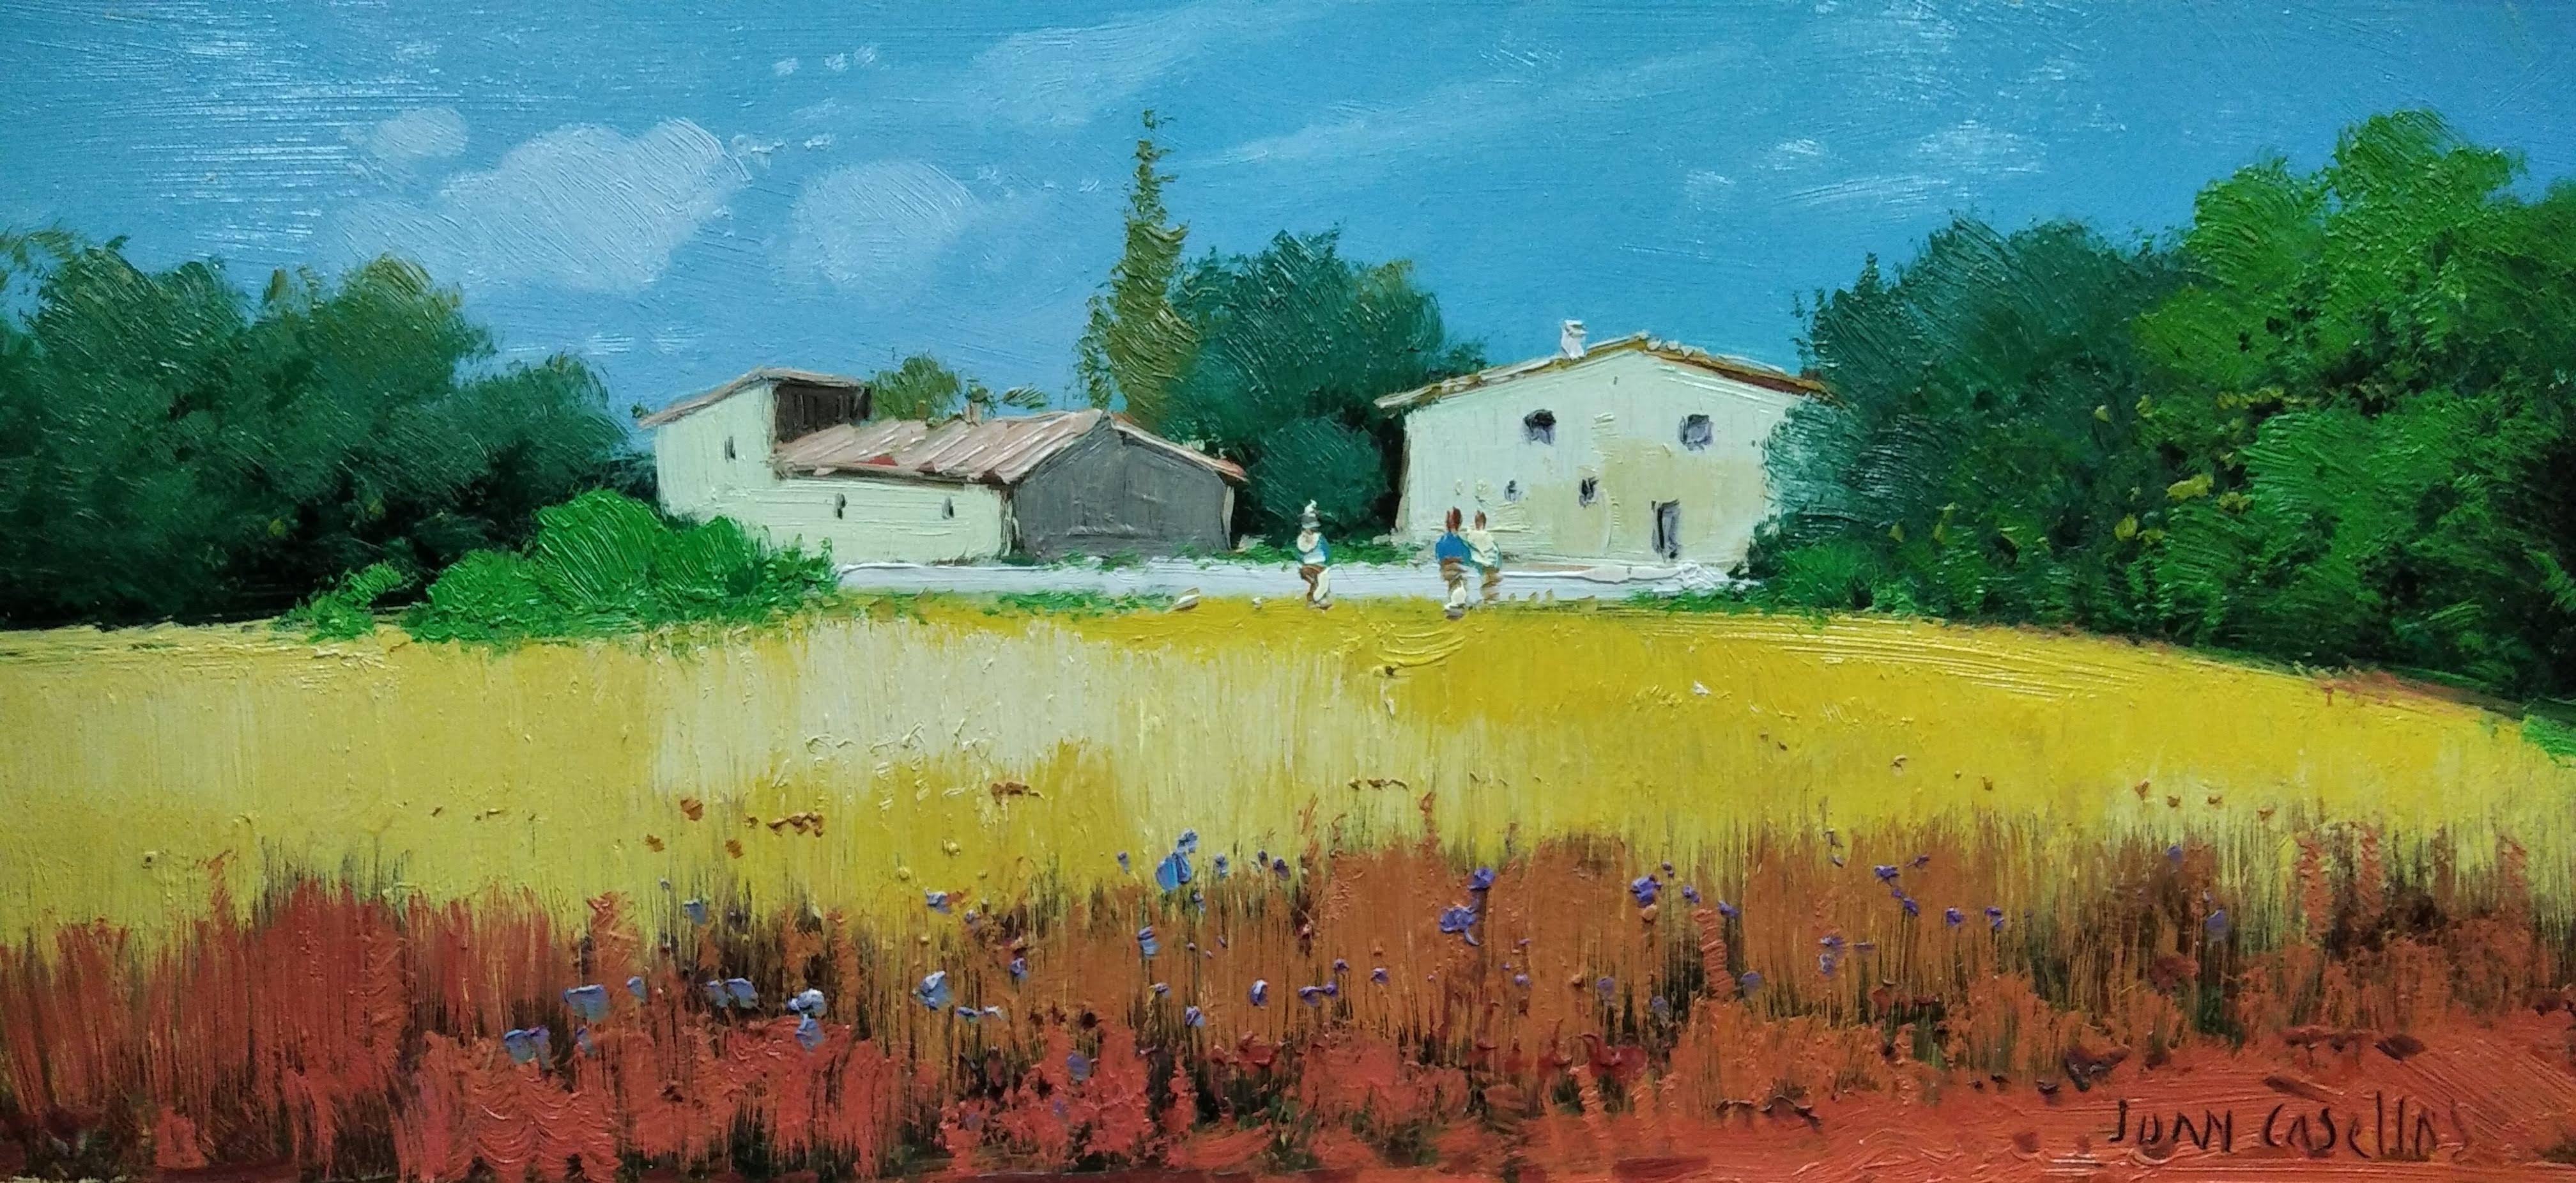 Juan Casellas  Landscape Painting - Untitled